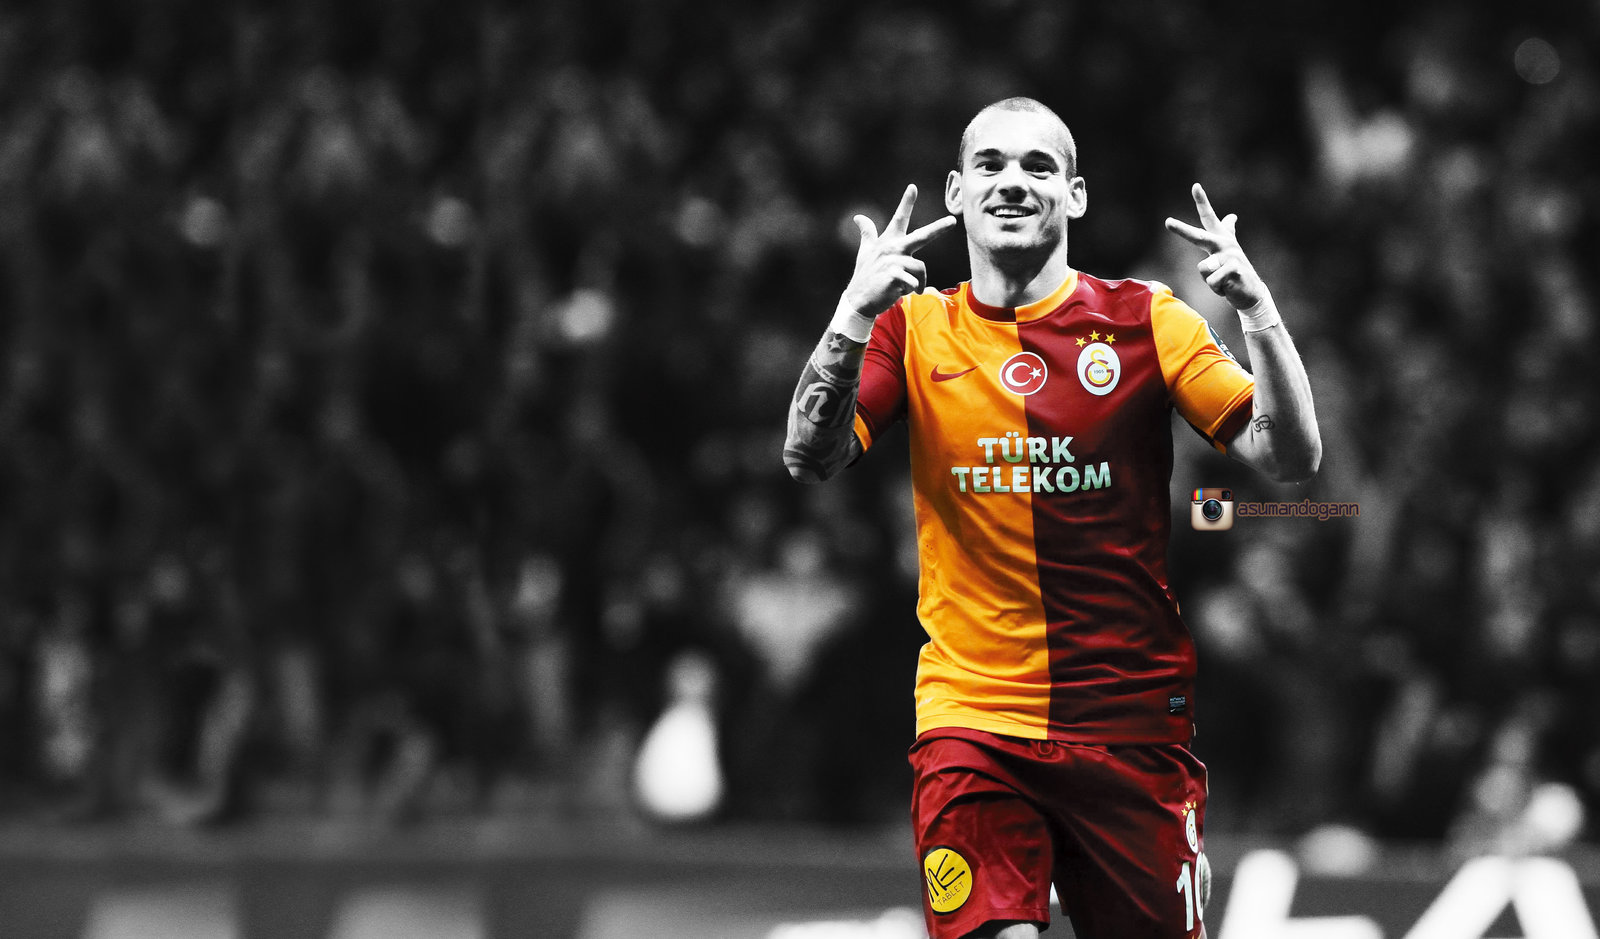 Wesley Sneijder Galatasaray By Asumandogan